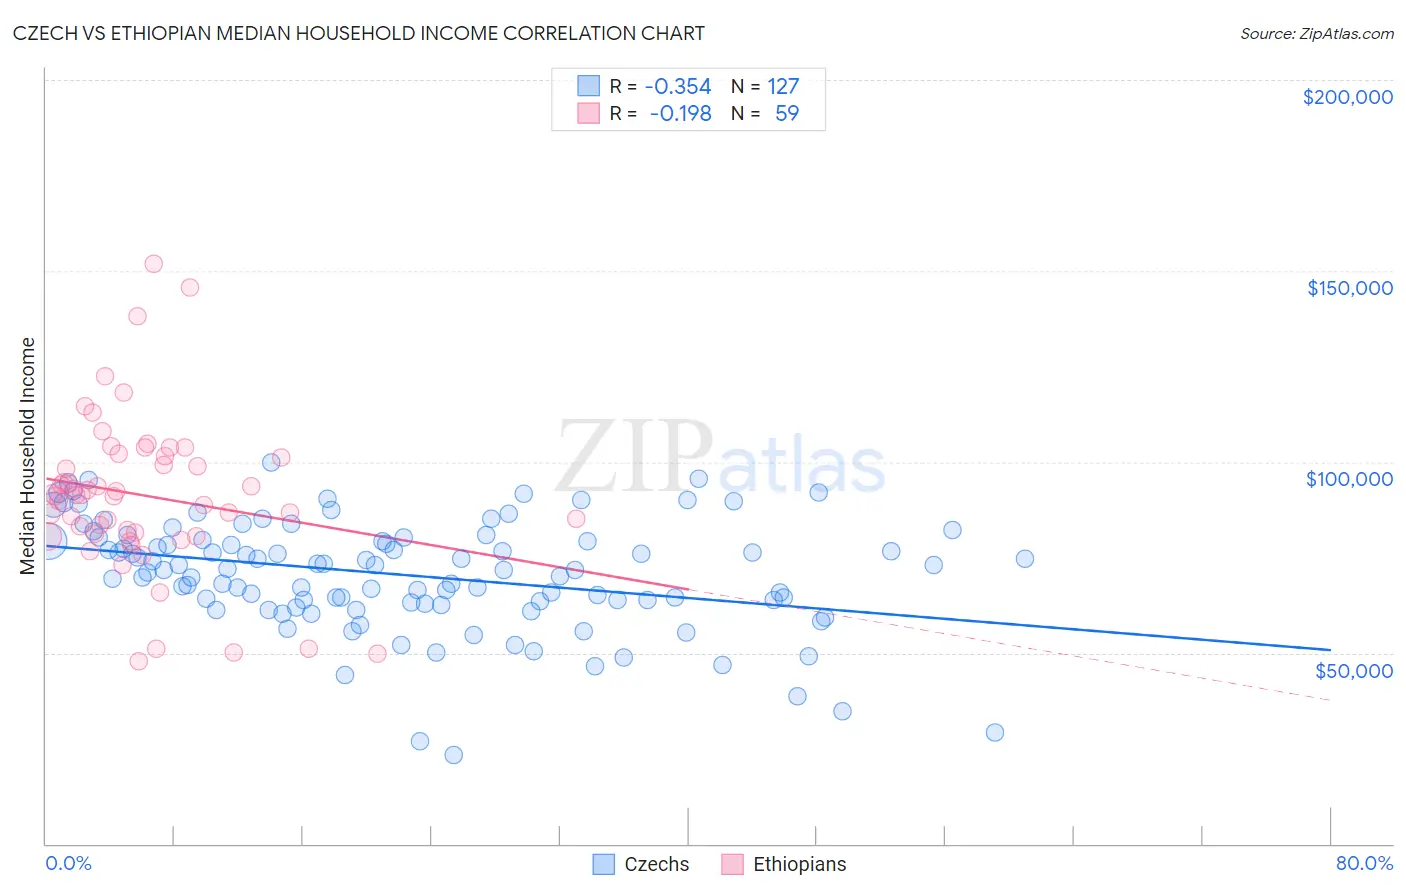 Czech vs Ethiopian Median Household Income